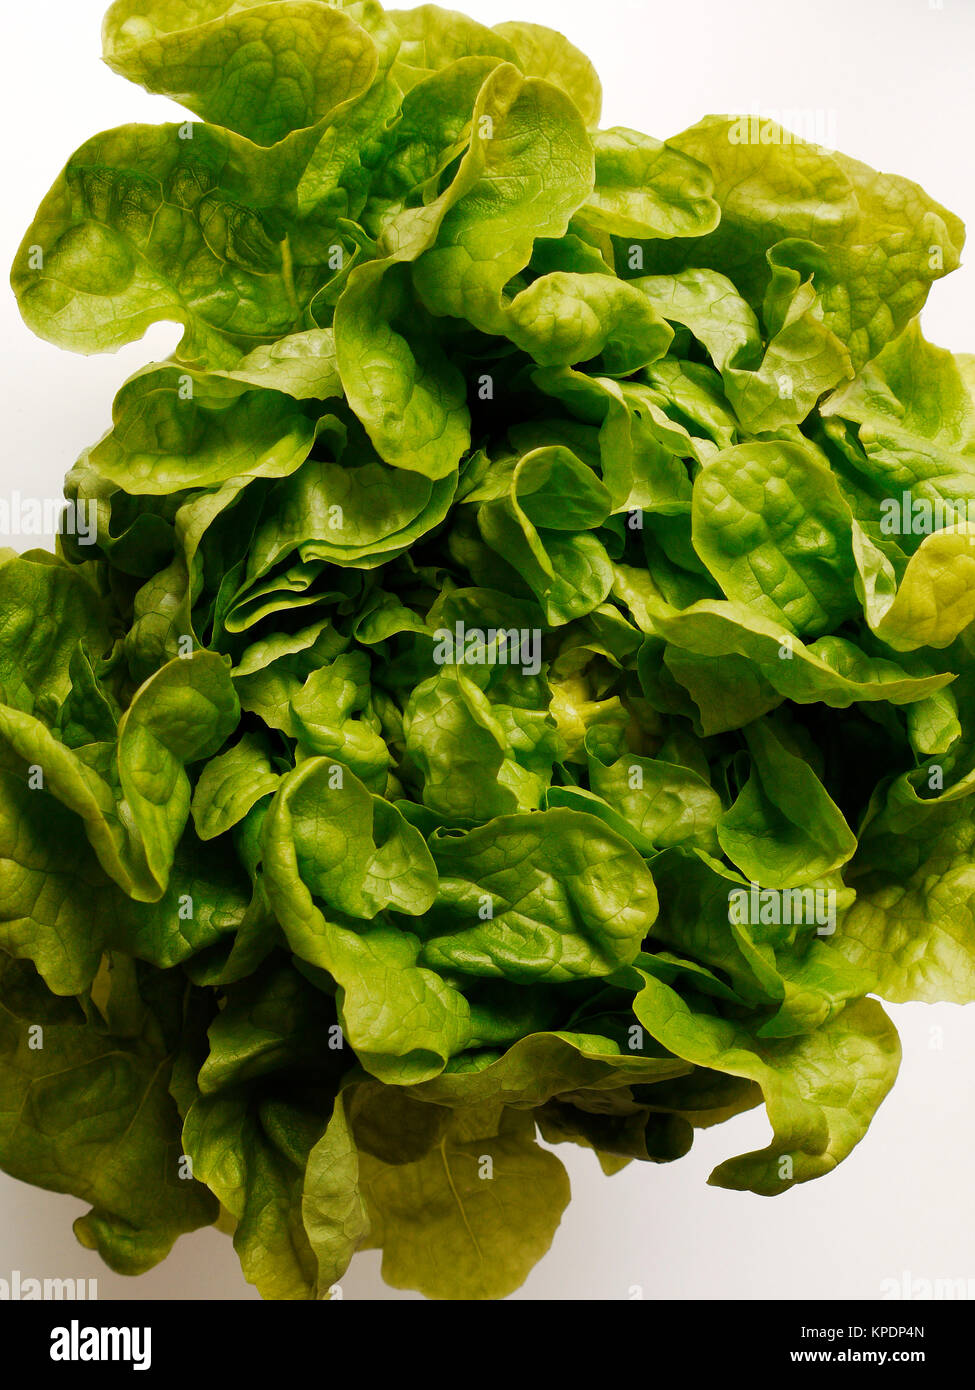 green oak leaf lettuce. garden salad (lactuca sativa). Stock Photo